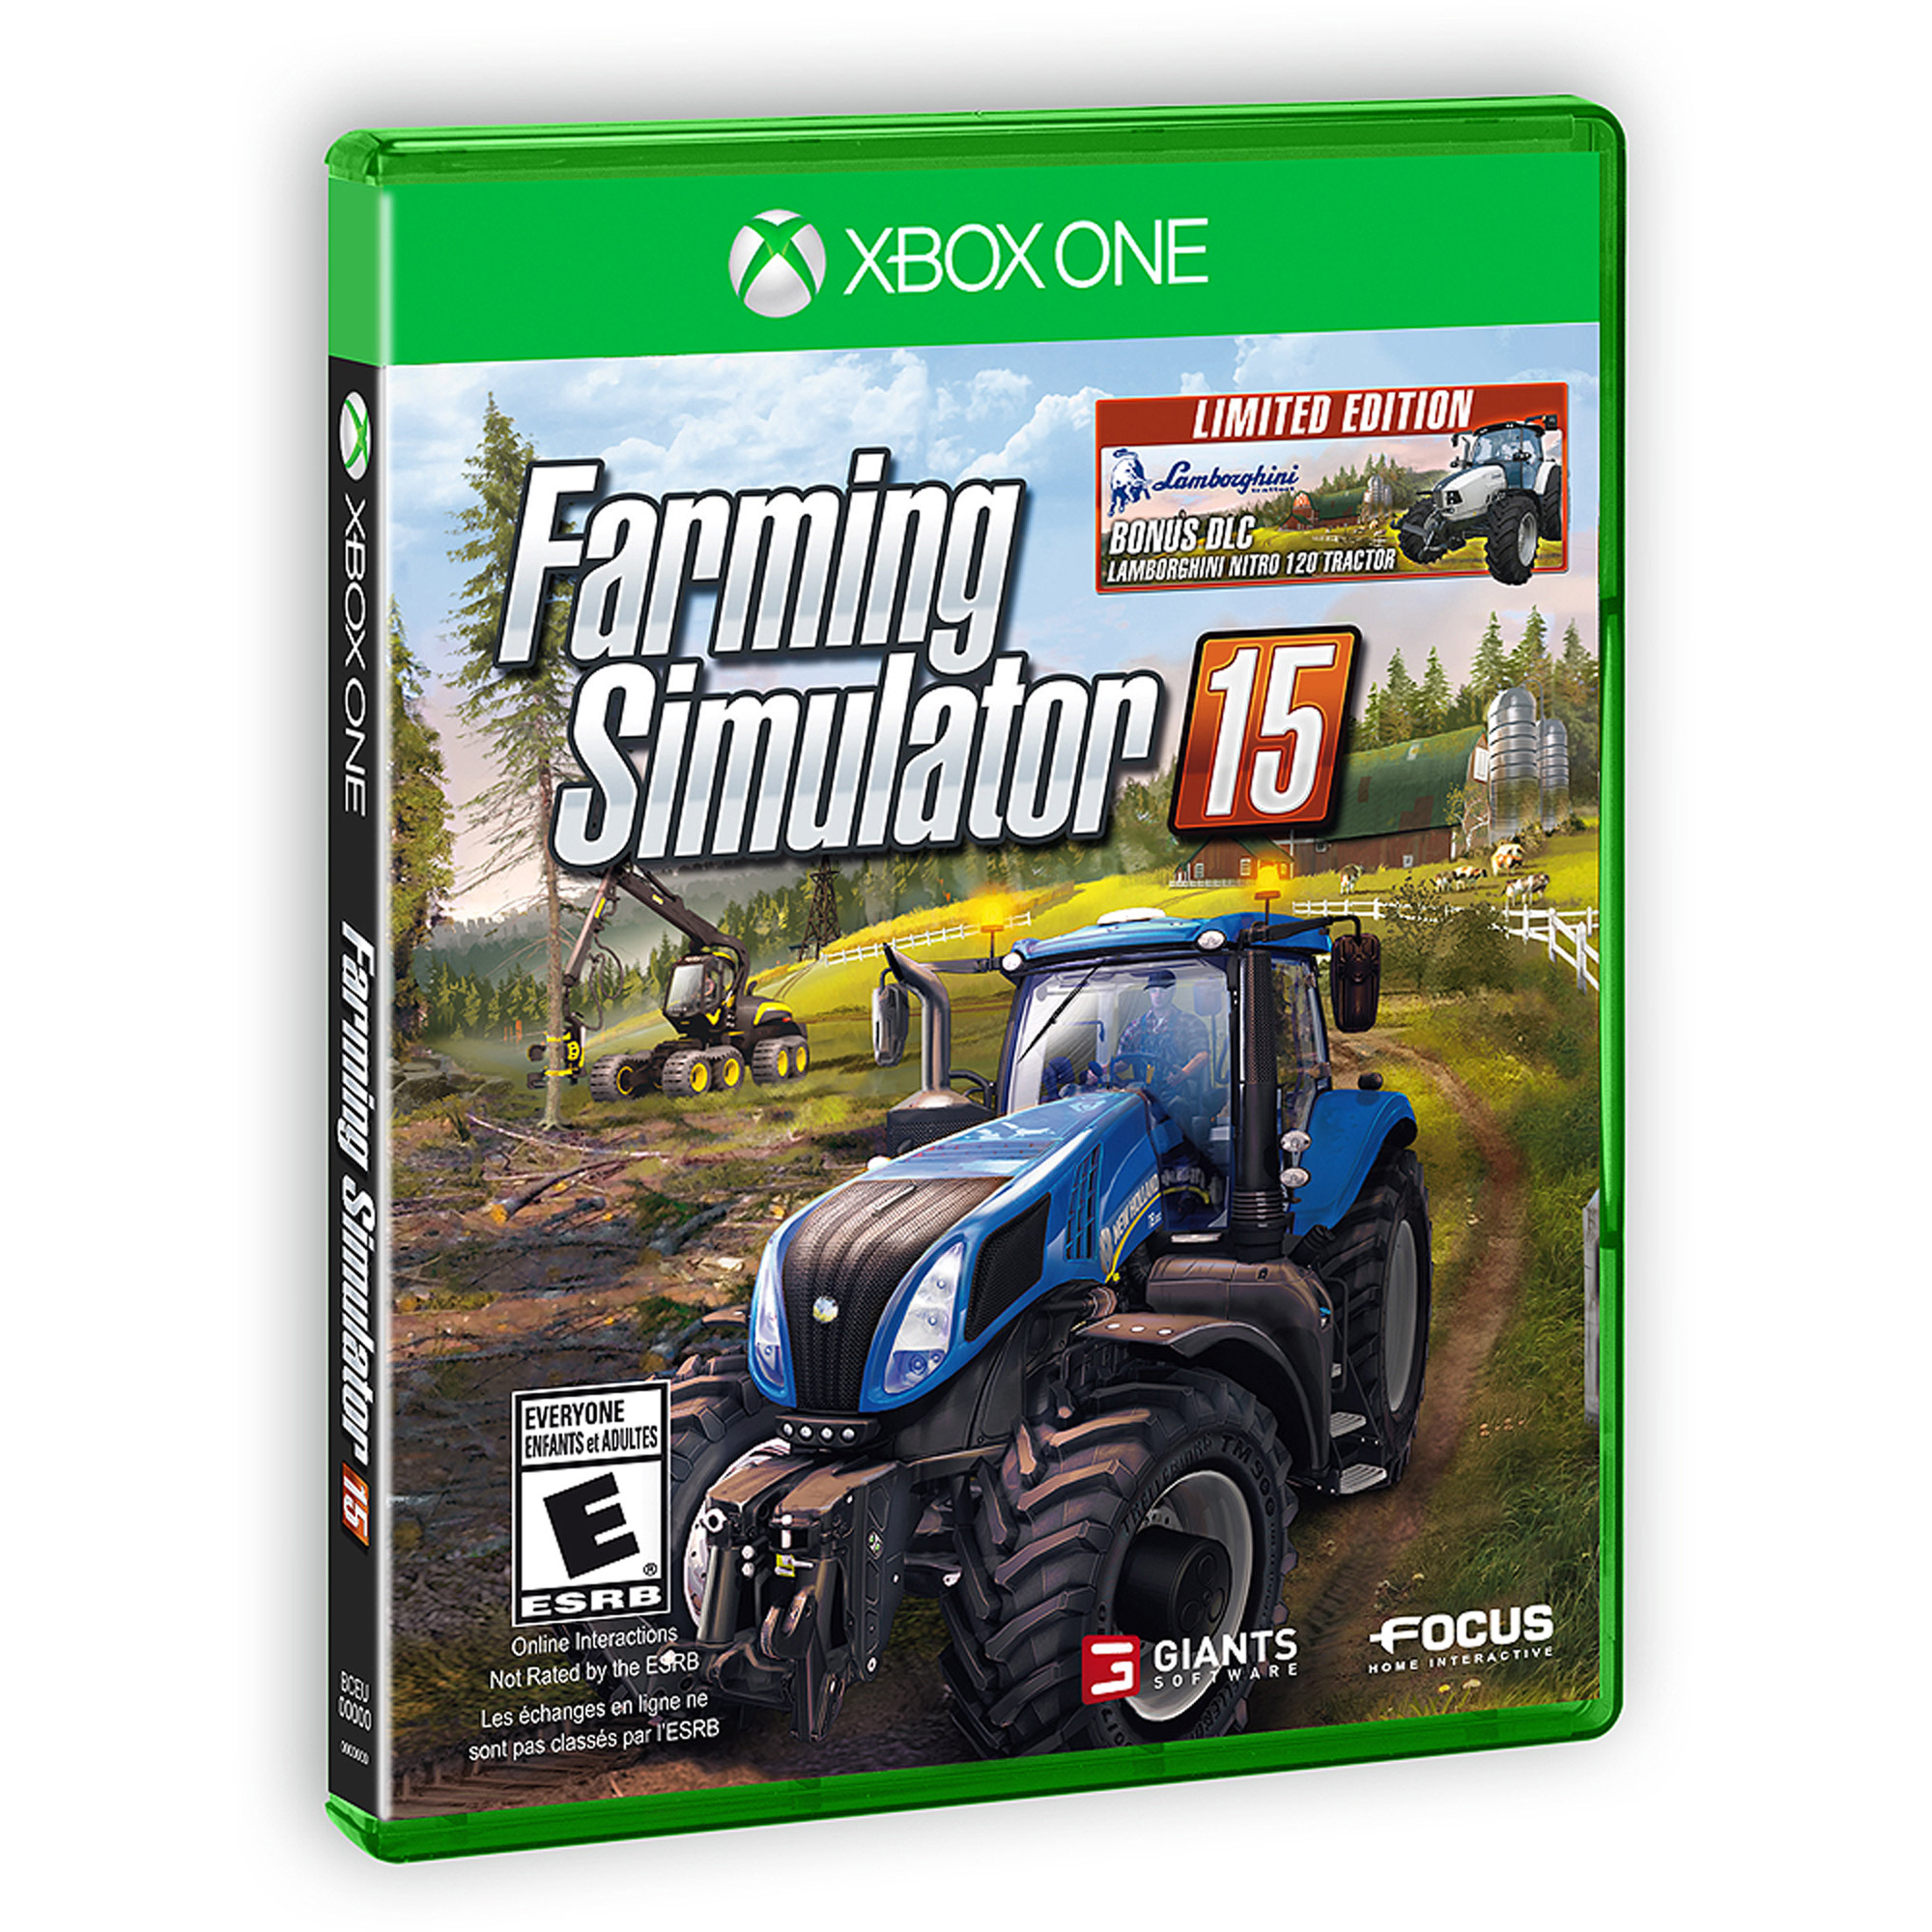 Farming simulator 15 pc free download